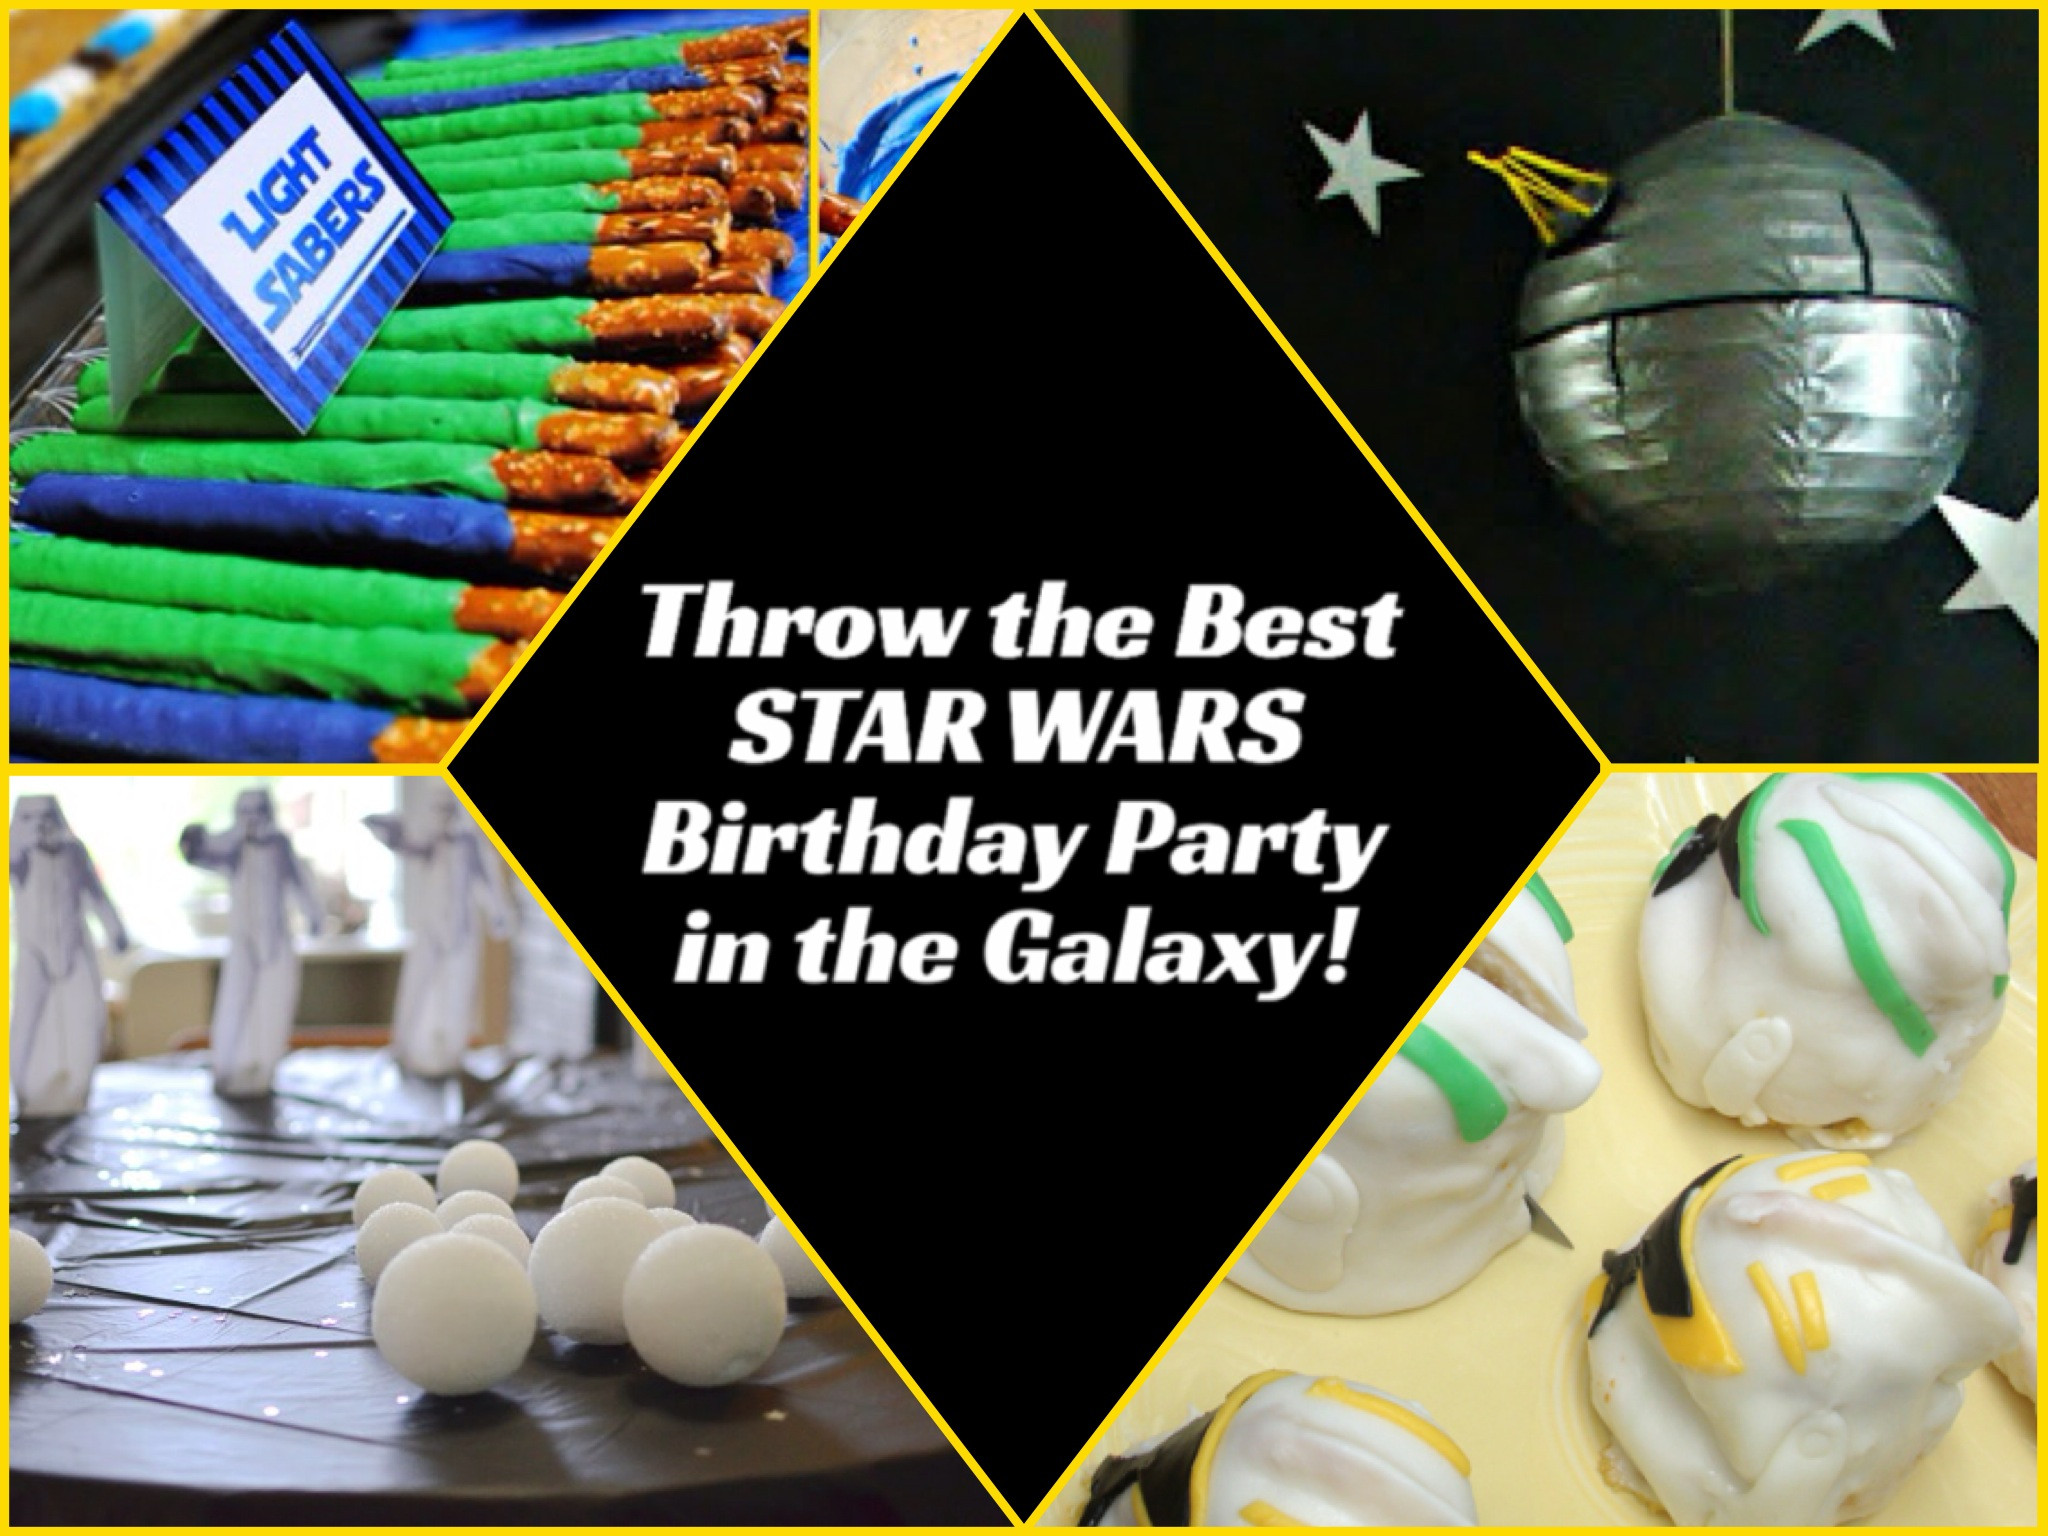 Star Wars Birthday Party Supplies
 13 Star Wars Party Ideas